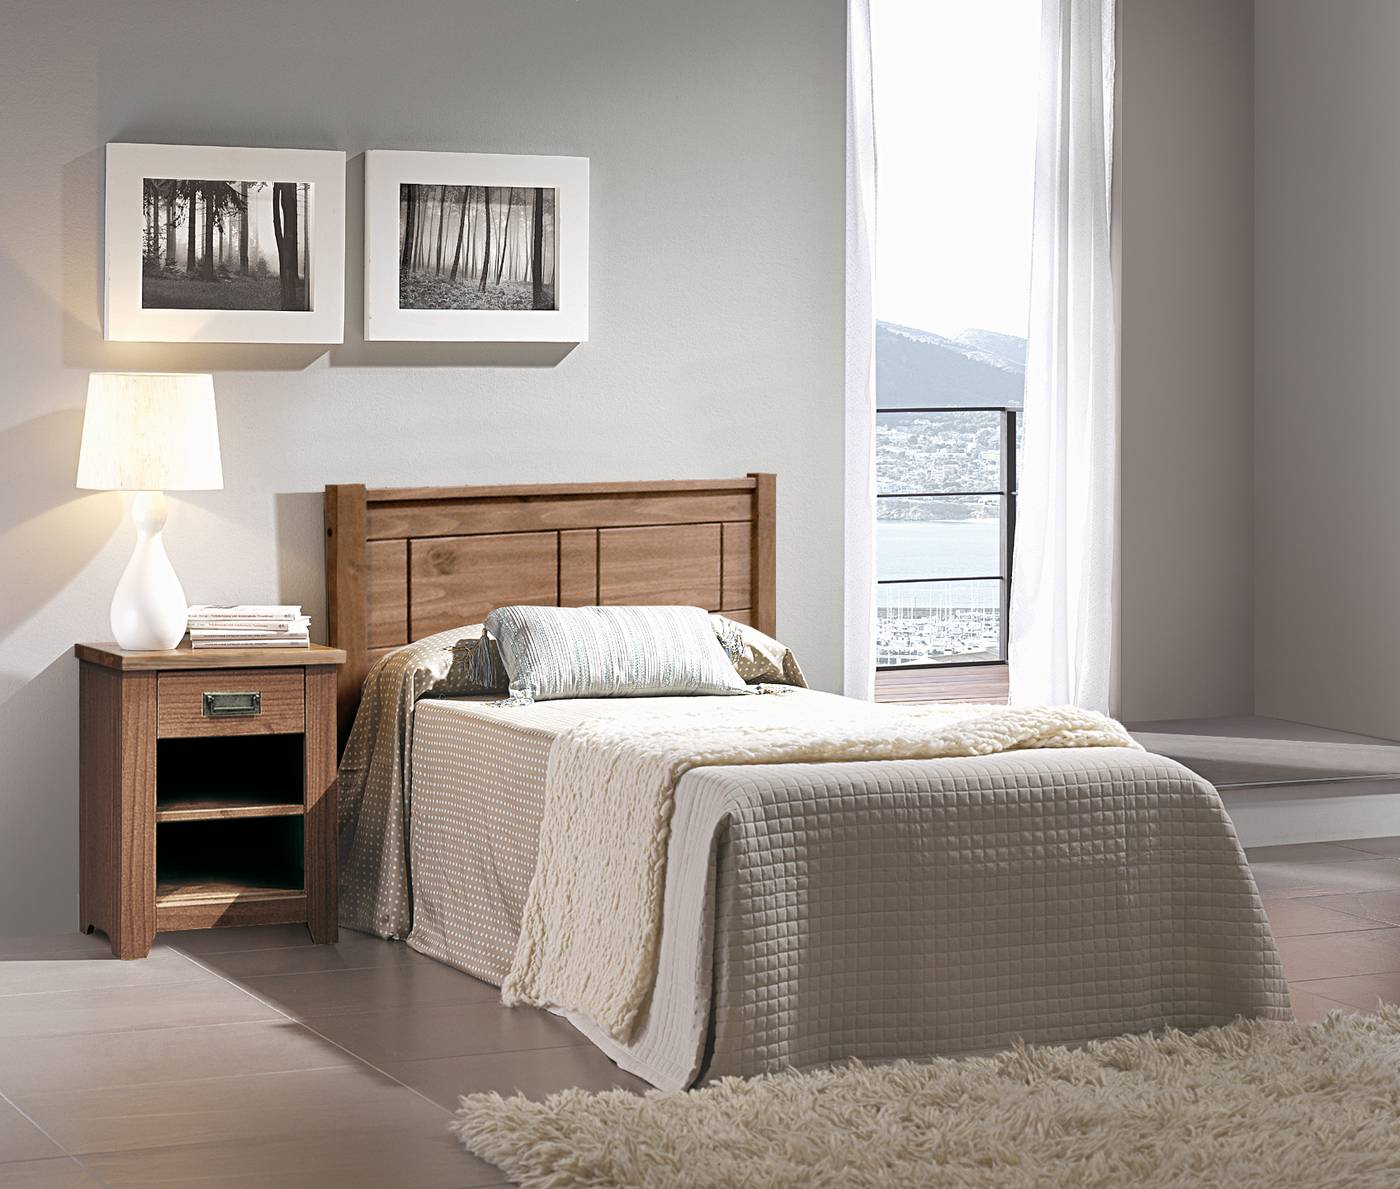 Dormitorio juvenil de madera maciza: cabezal + mesita color nogal